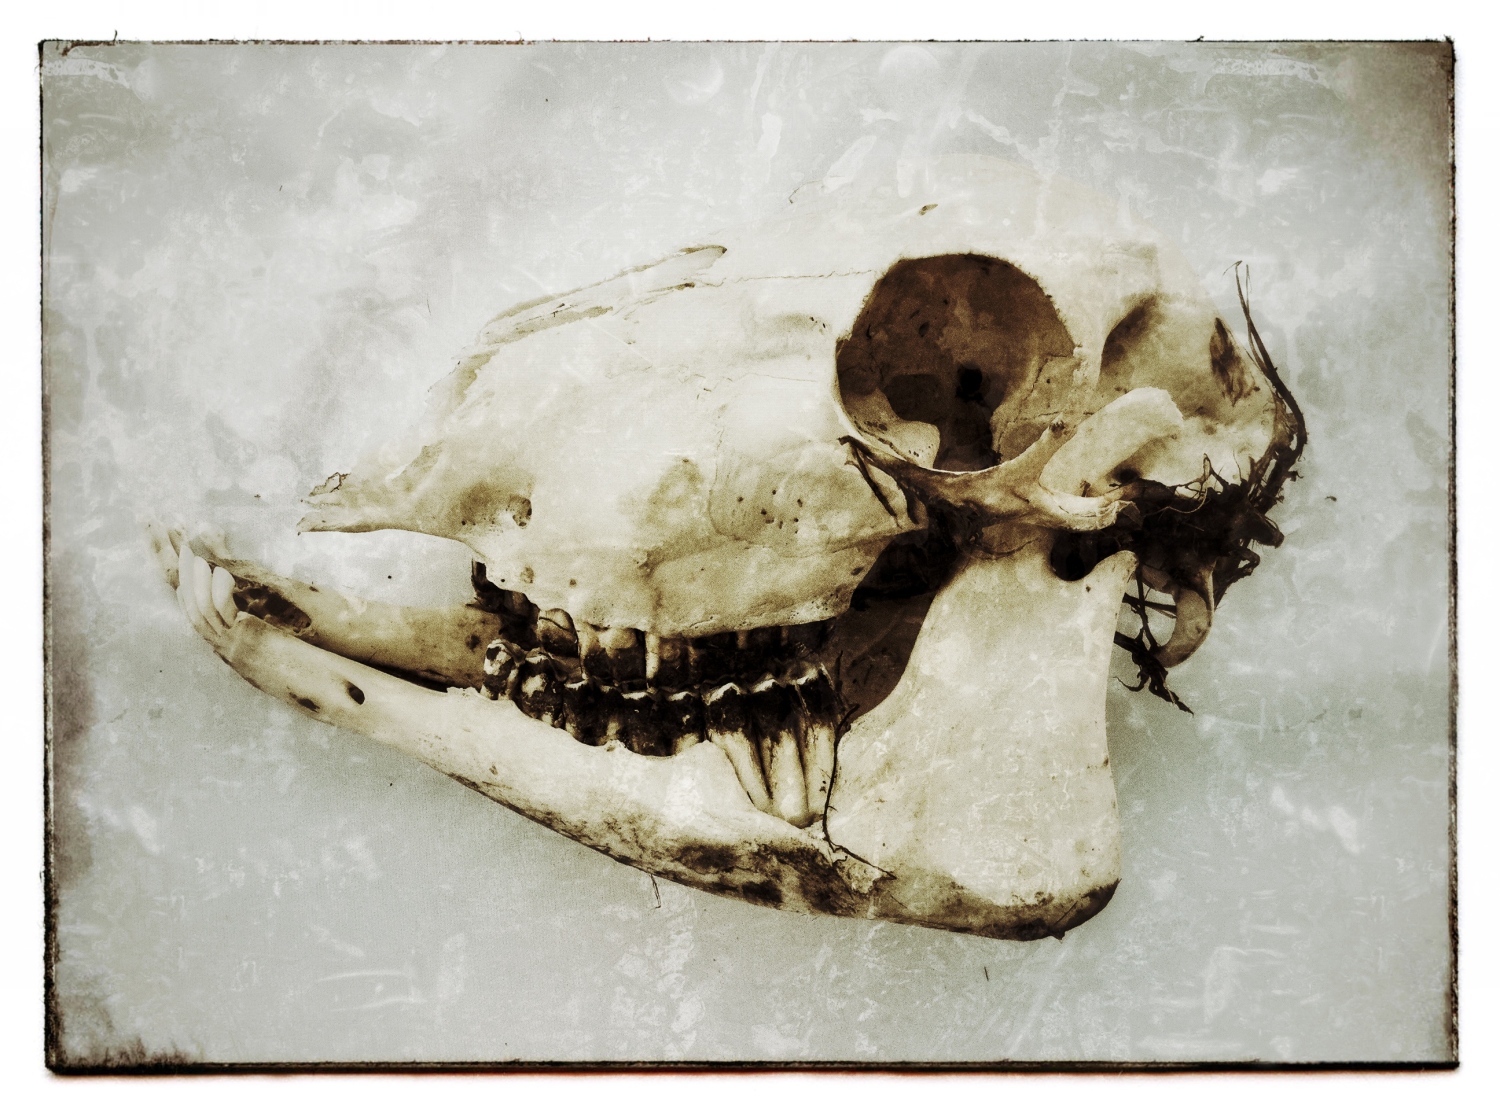 Skull photo by Judith Monroe